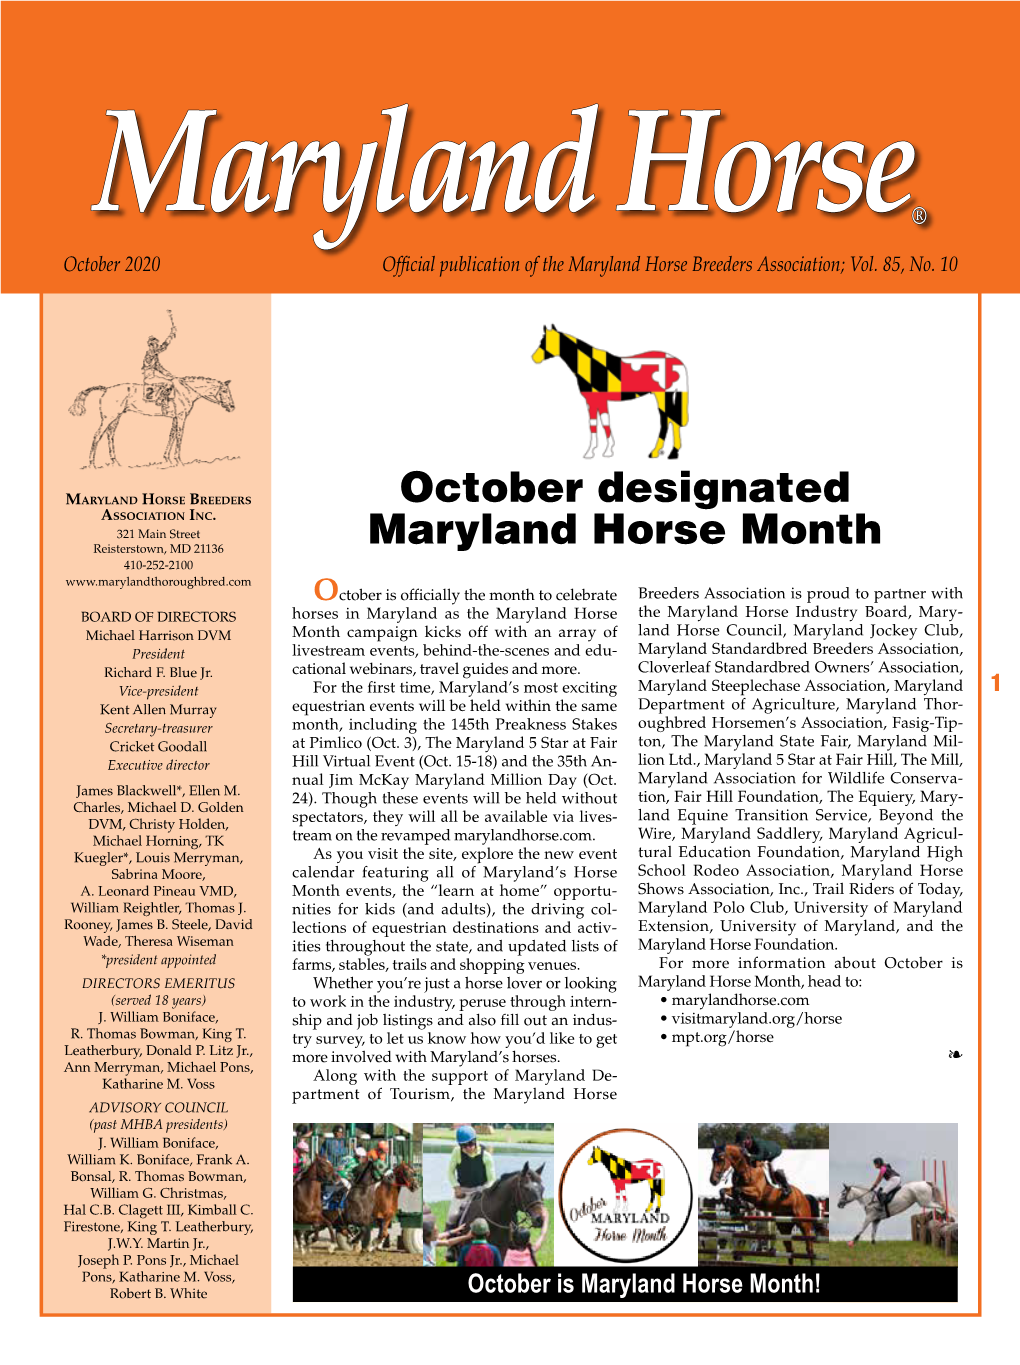 October Designated Maryland Horse Month